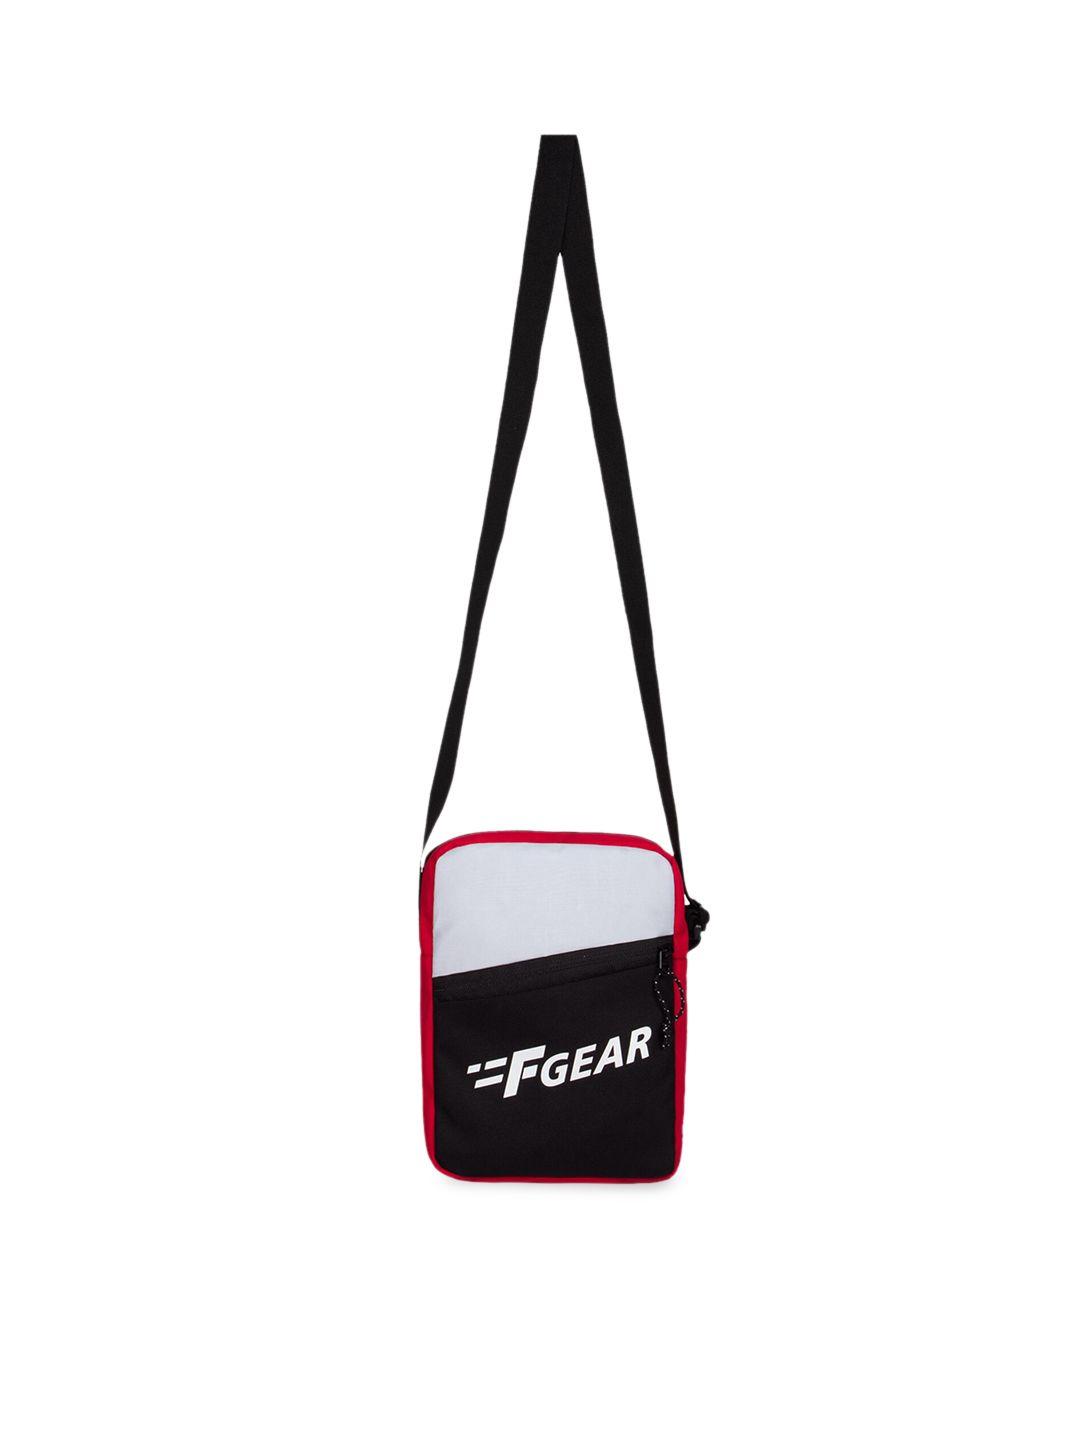 f gear printed shopper sling bag